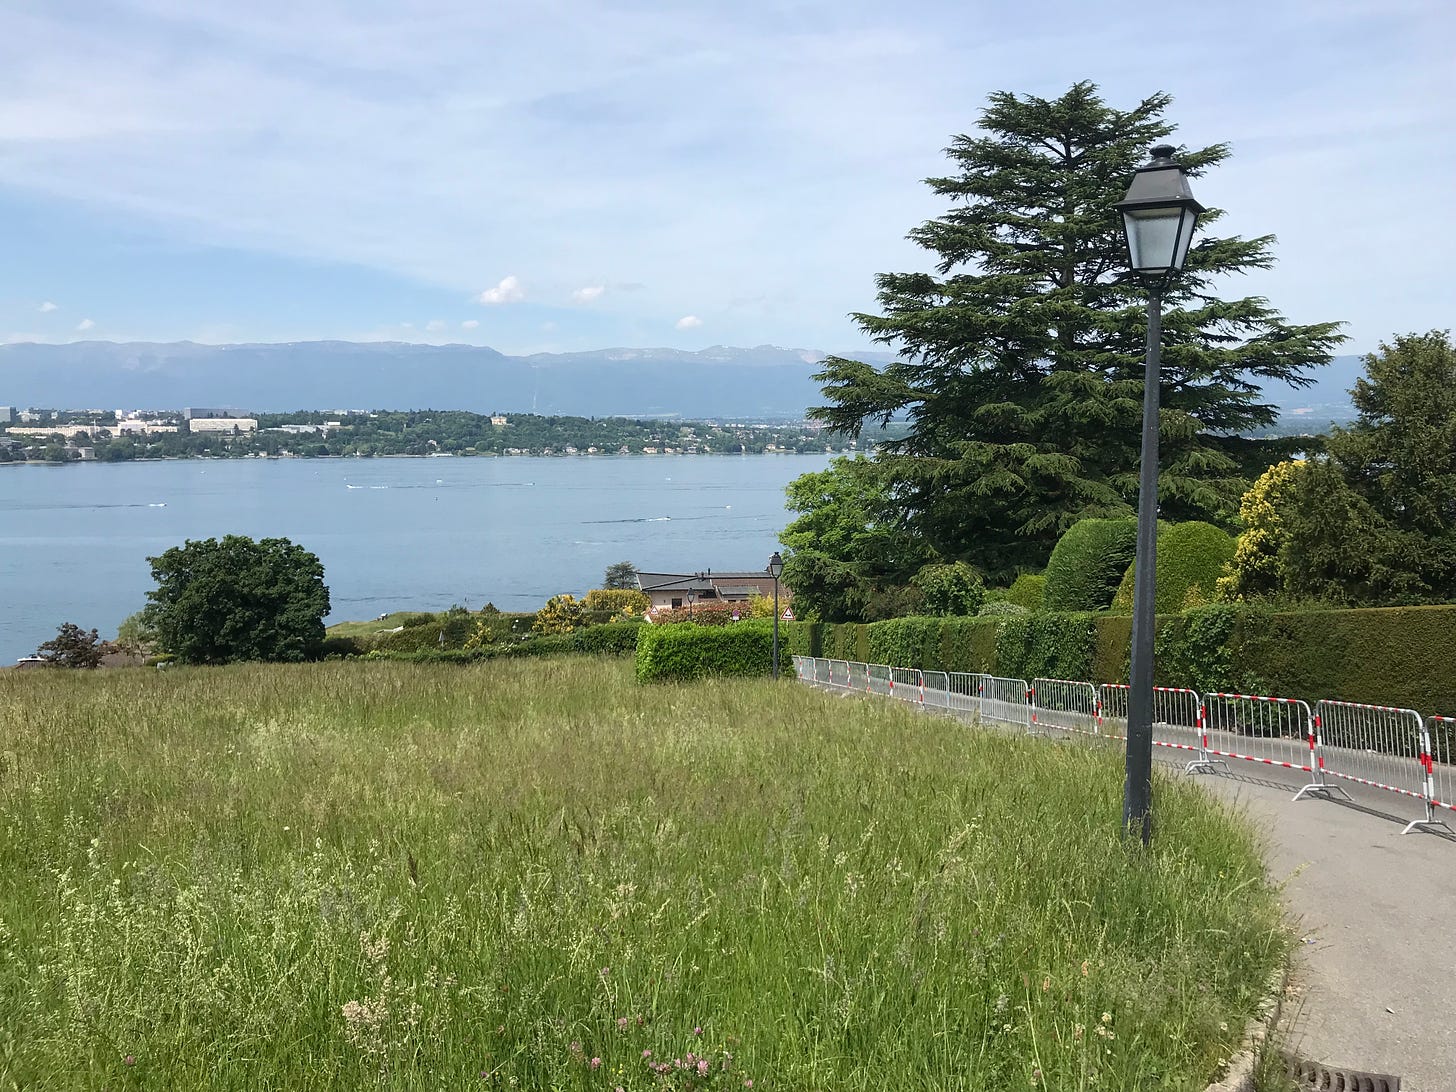 A sunny day overlooking Lake Geneva